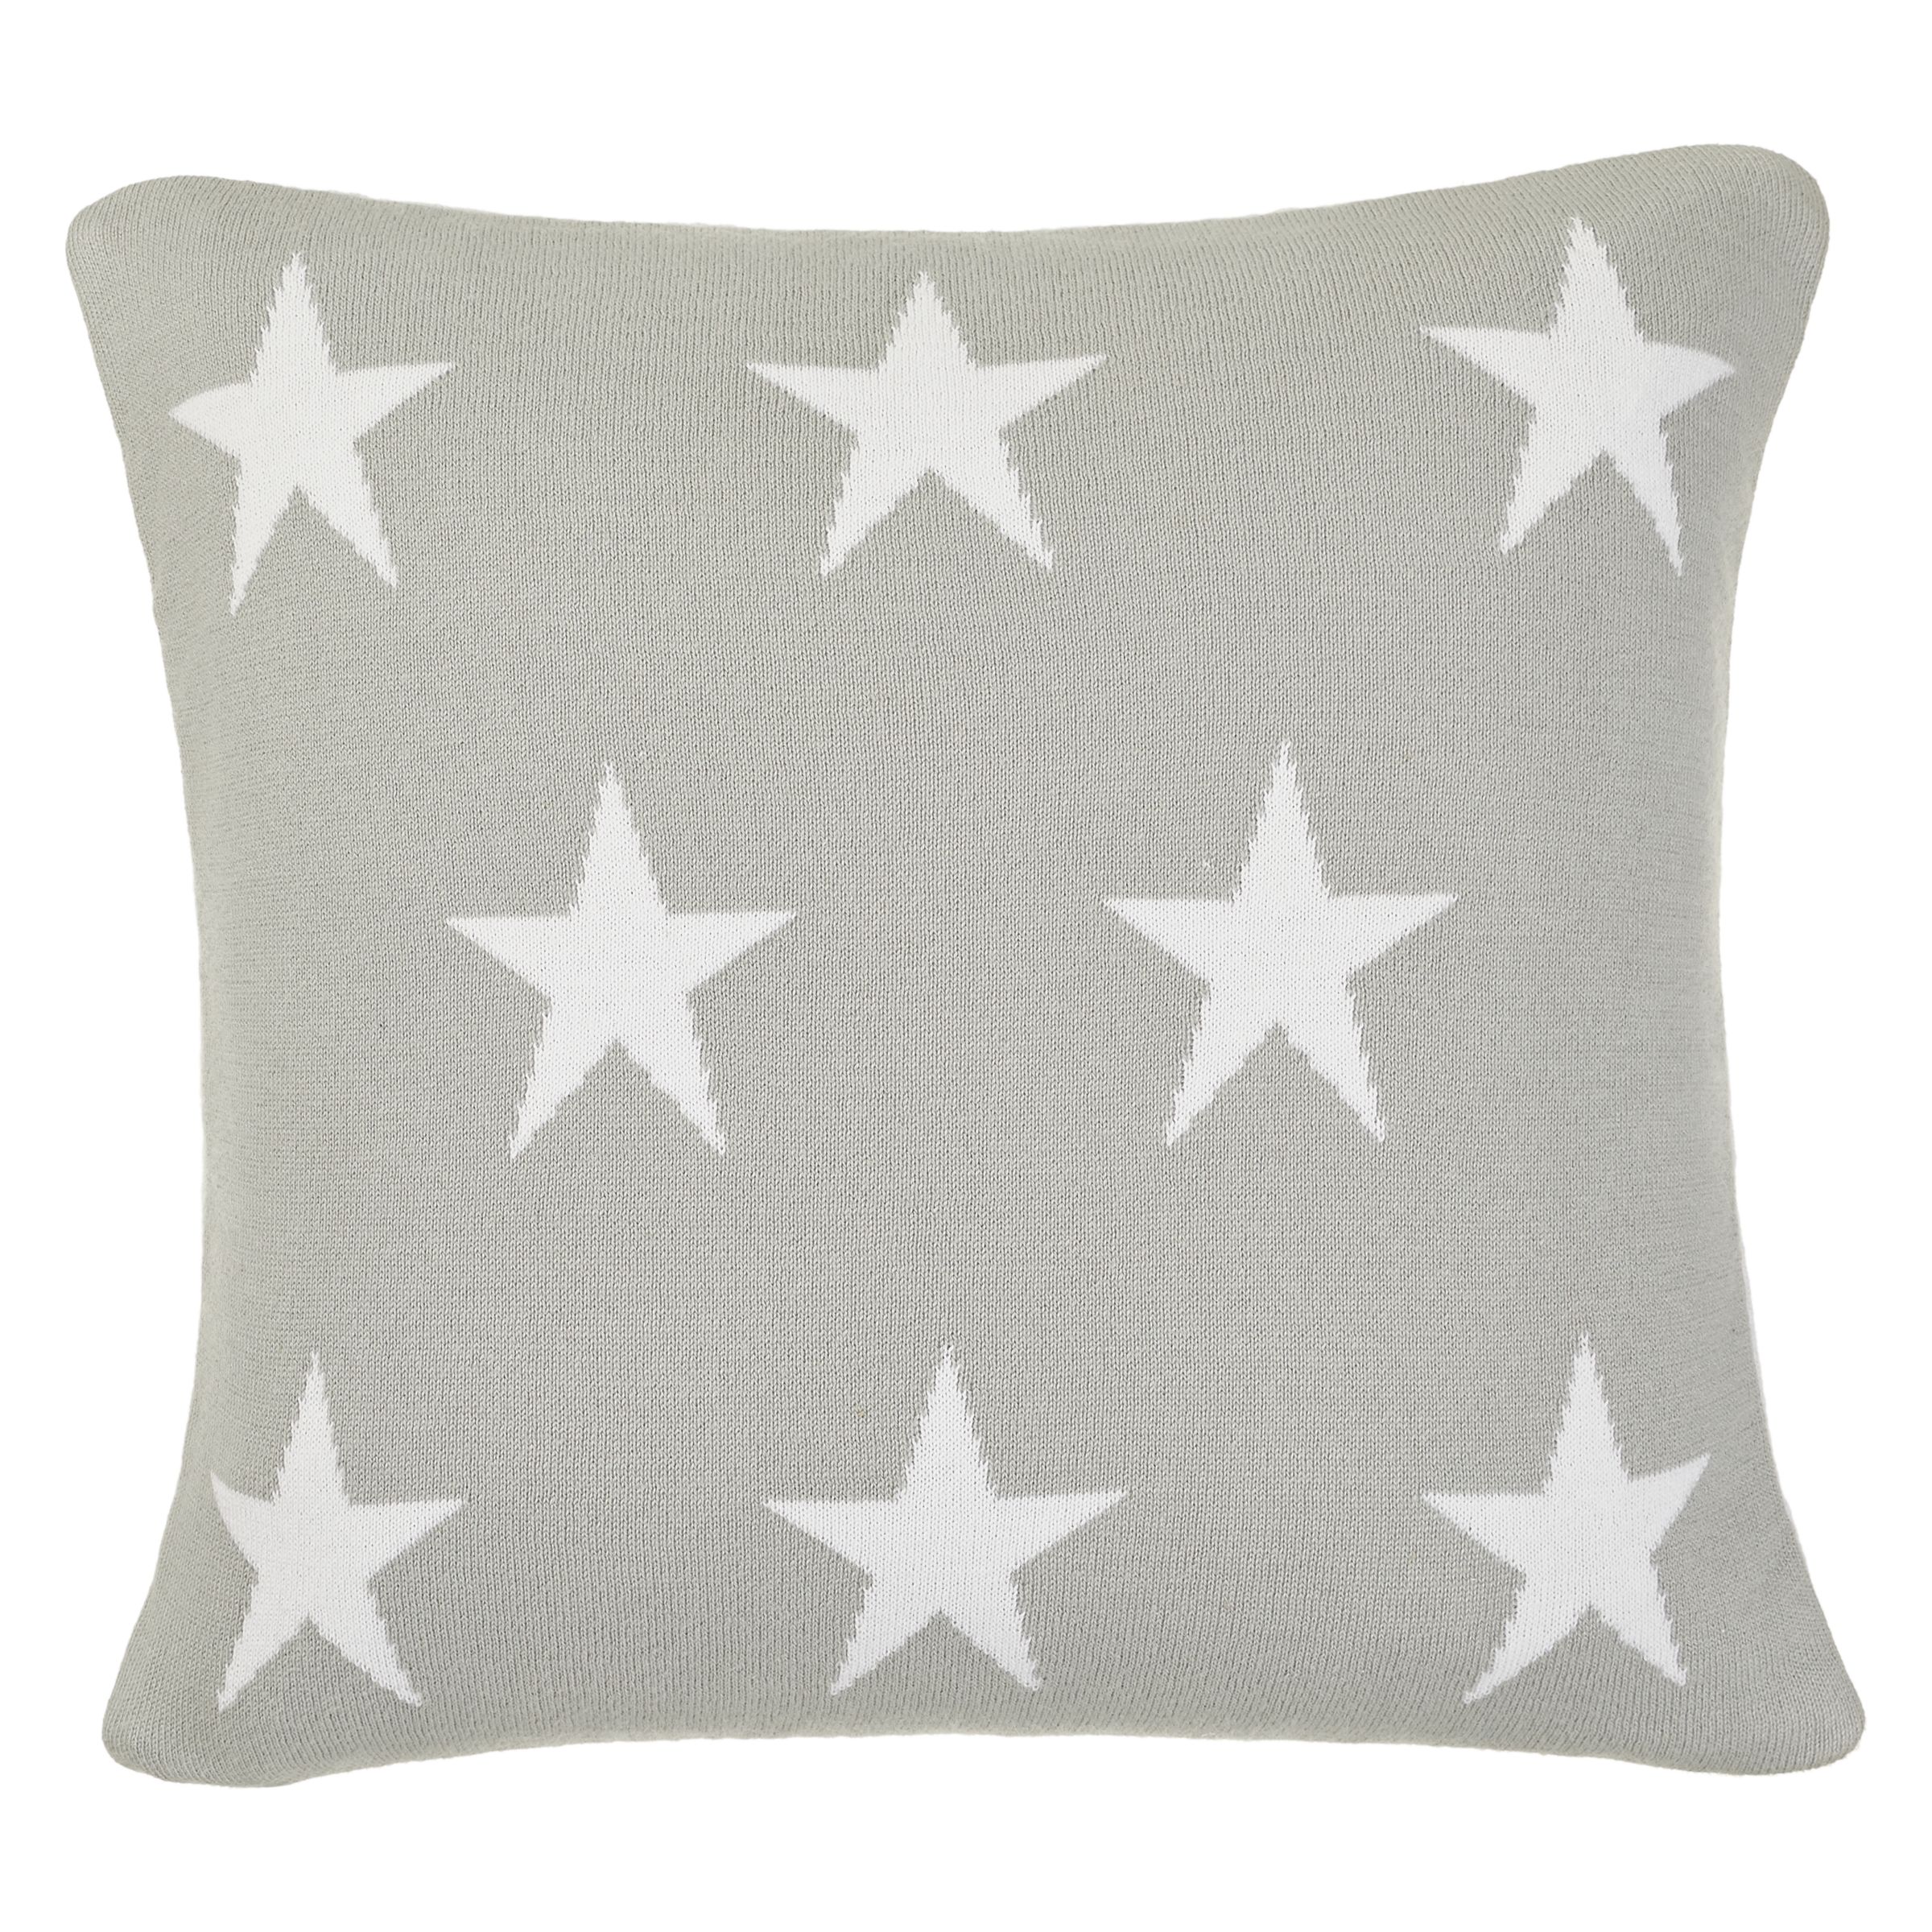 John Lewis Star Cushion, Grey/White